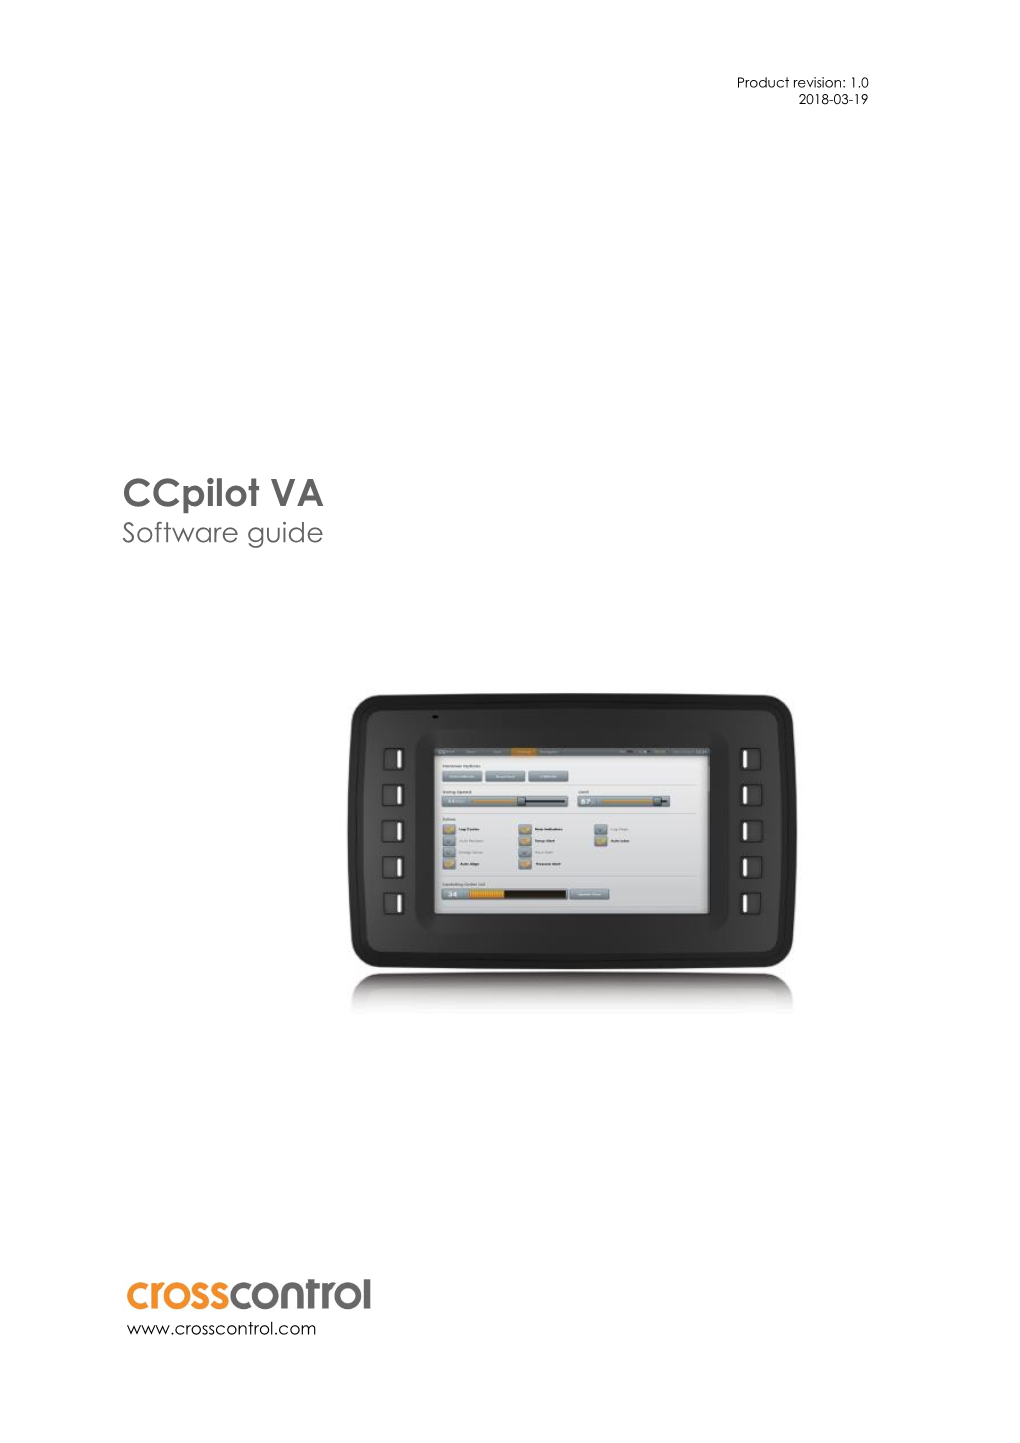 Ccpilot VA Software Guide